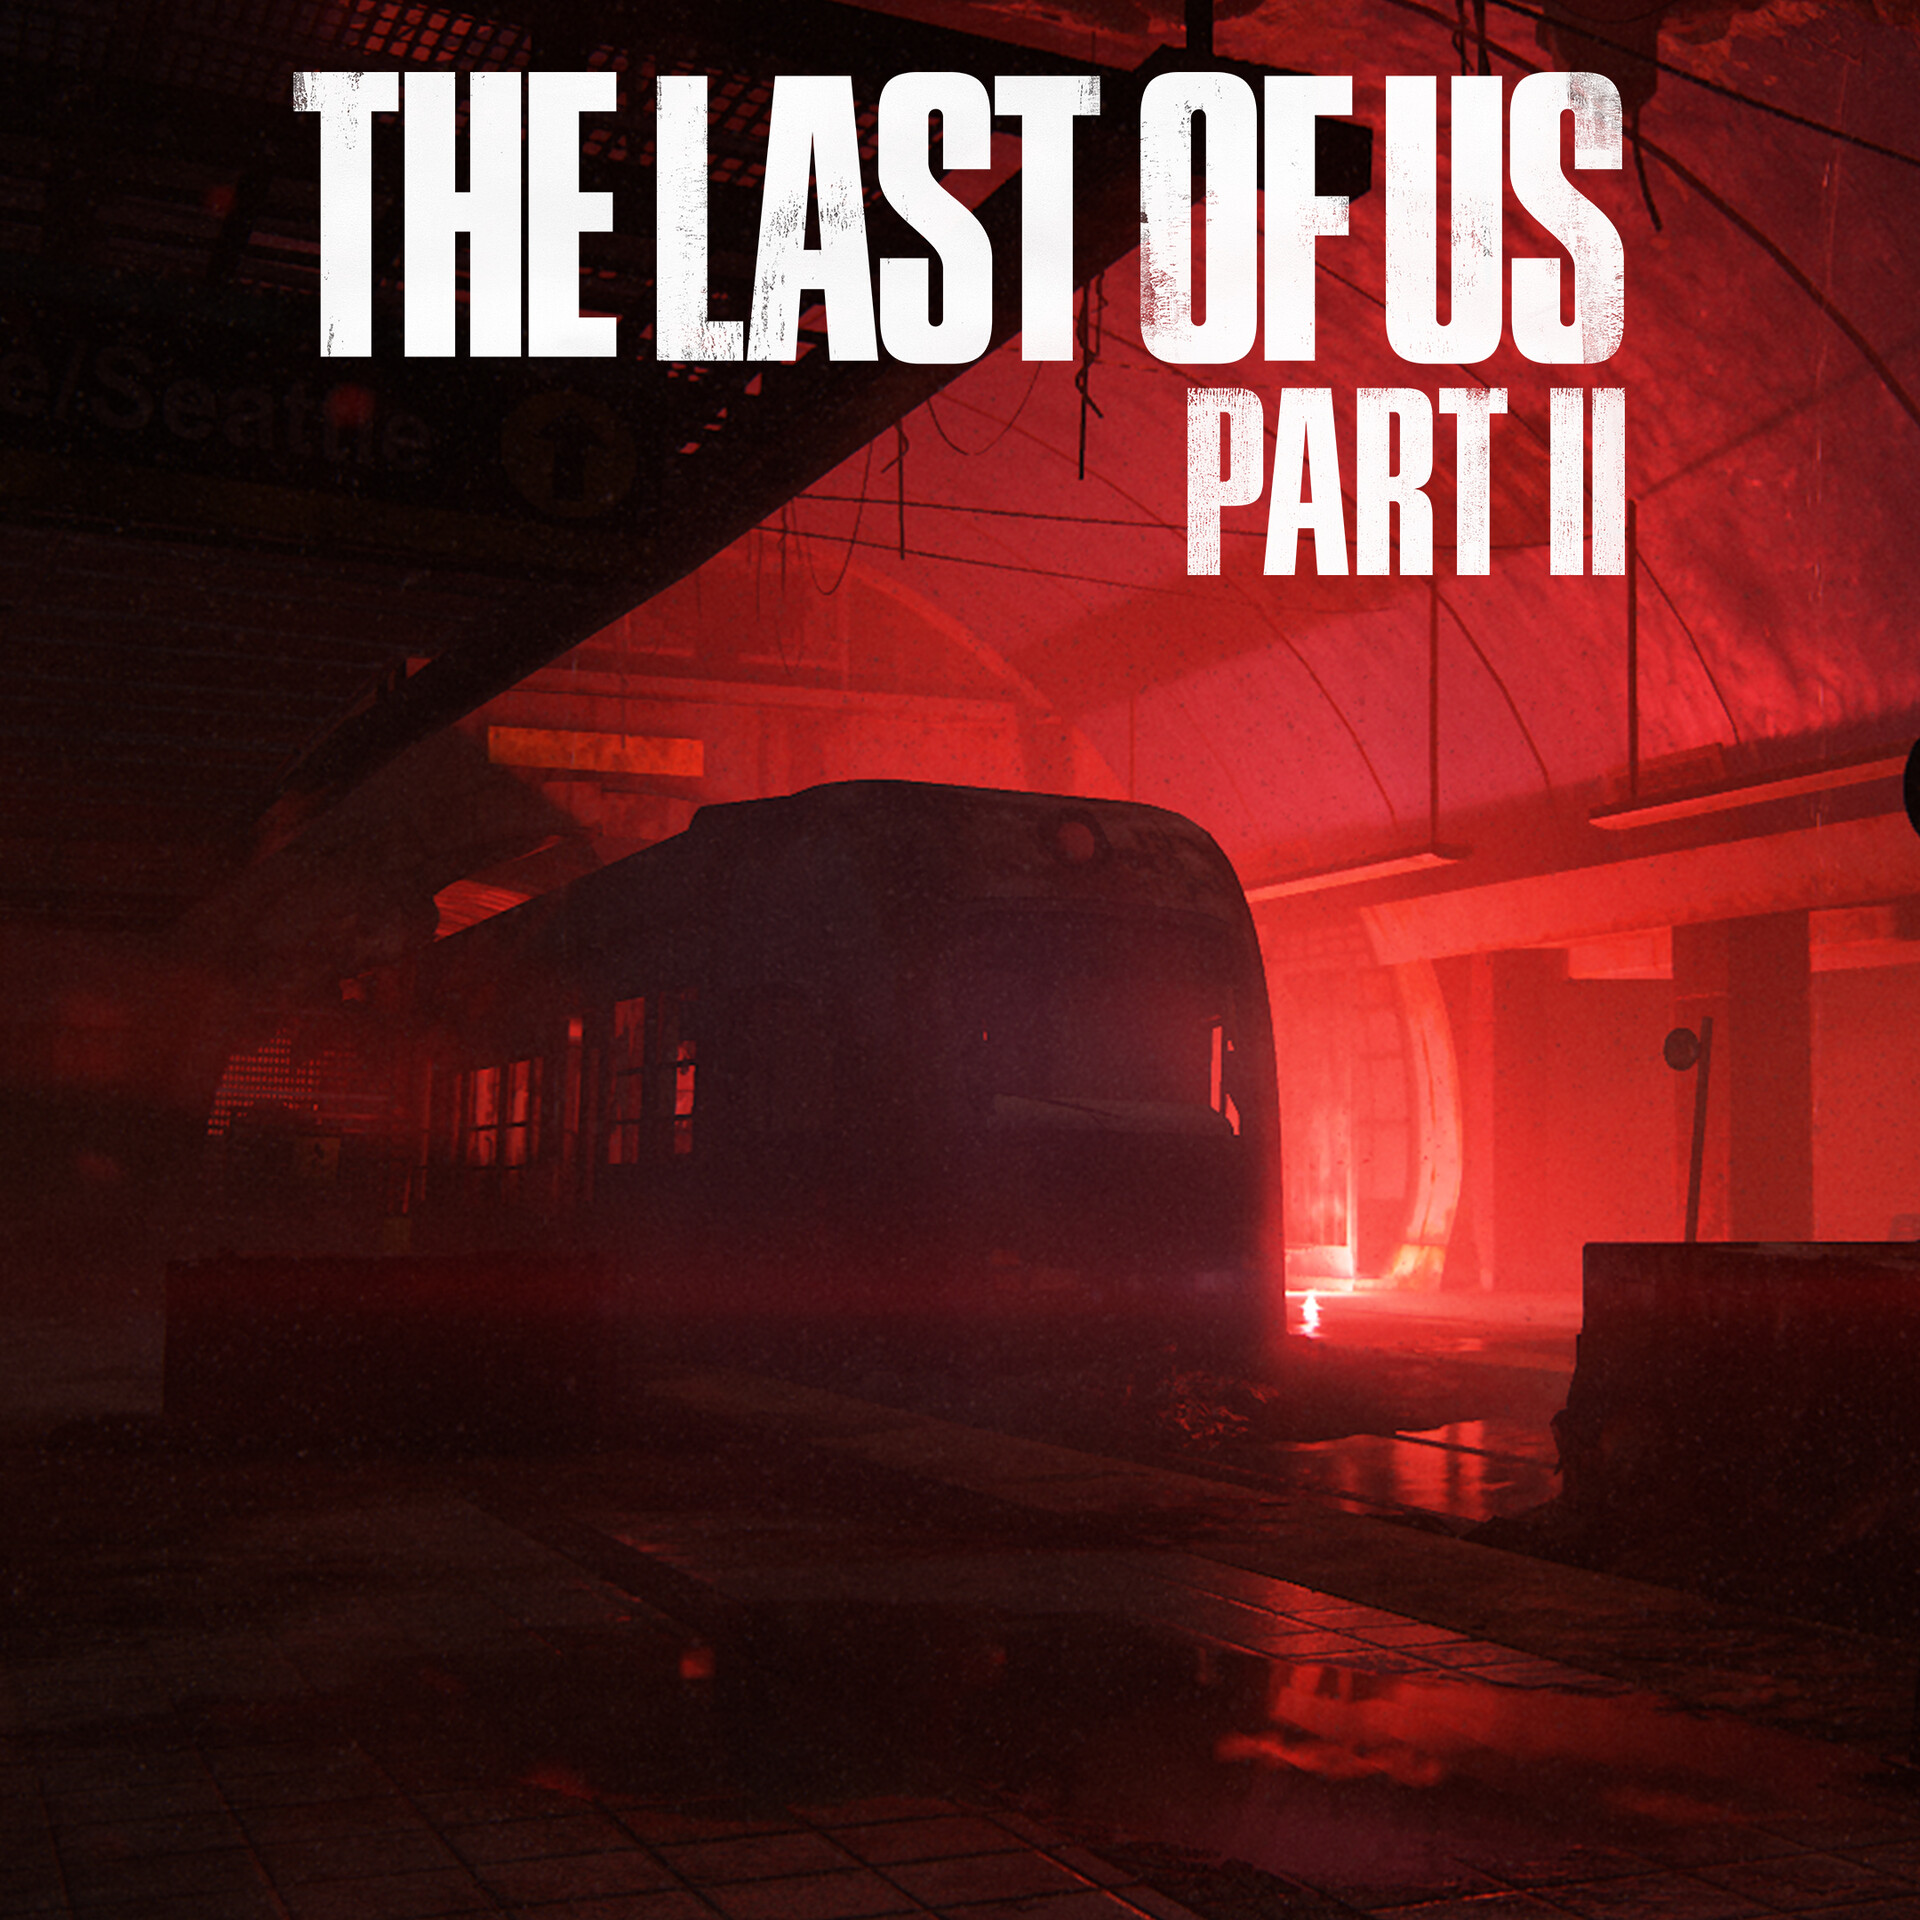 ArtStation - The Last of Us Episode 3